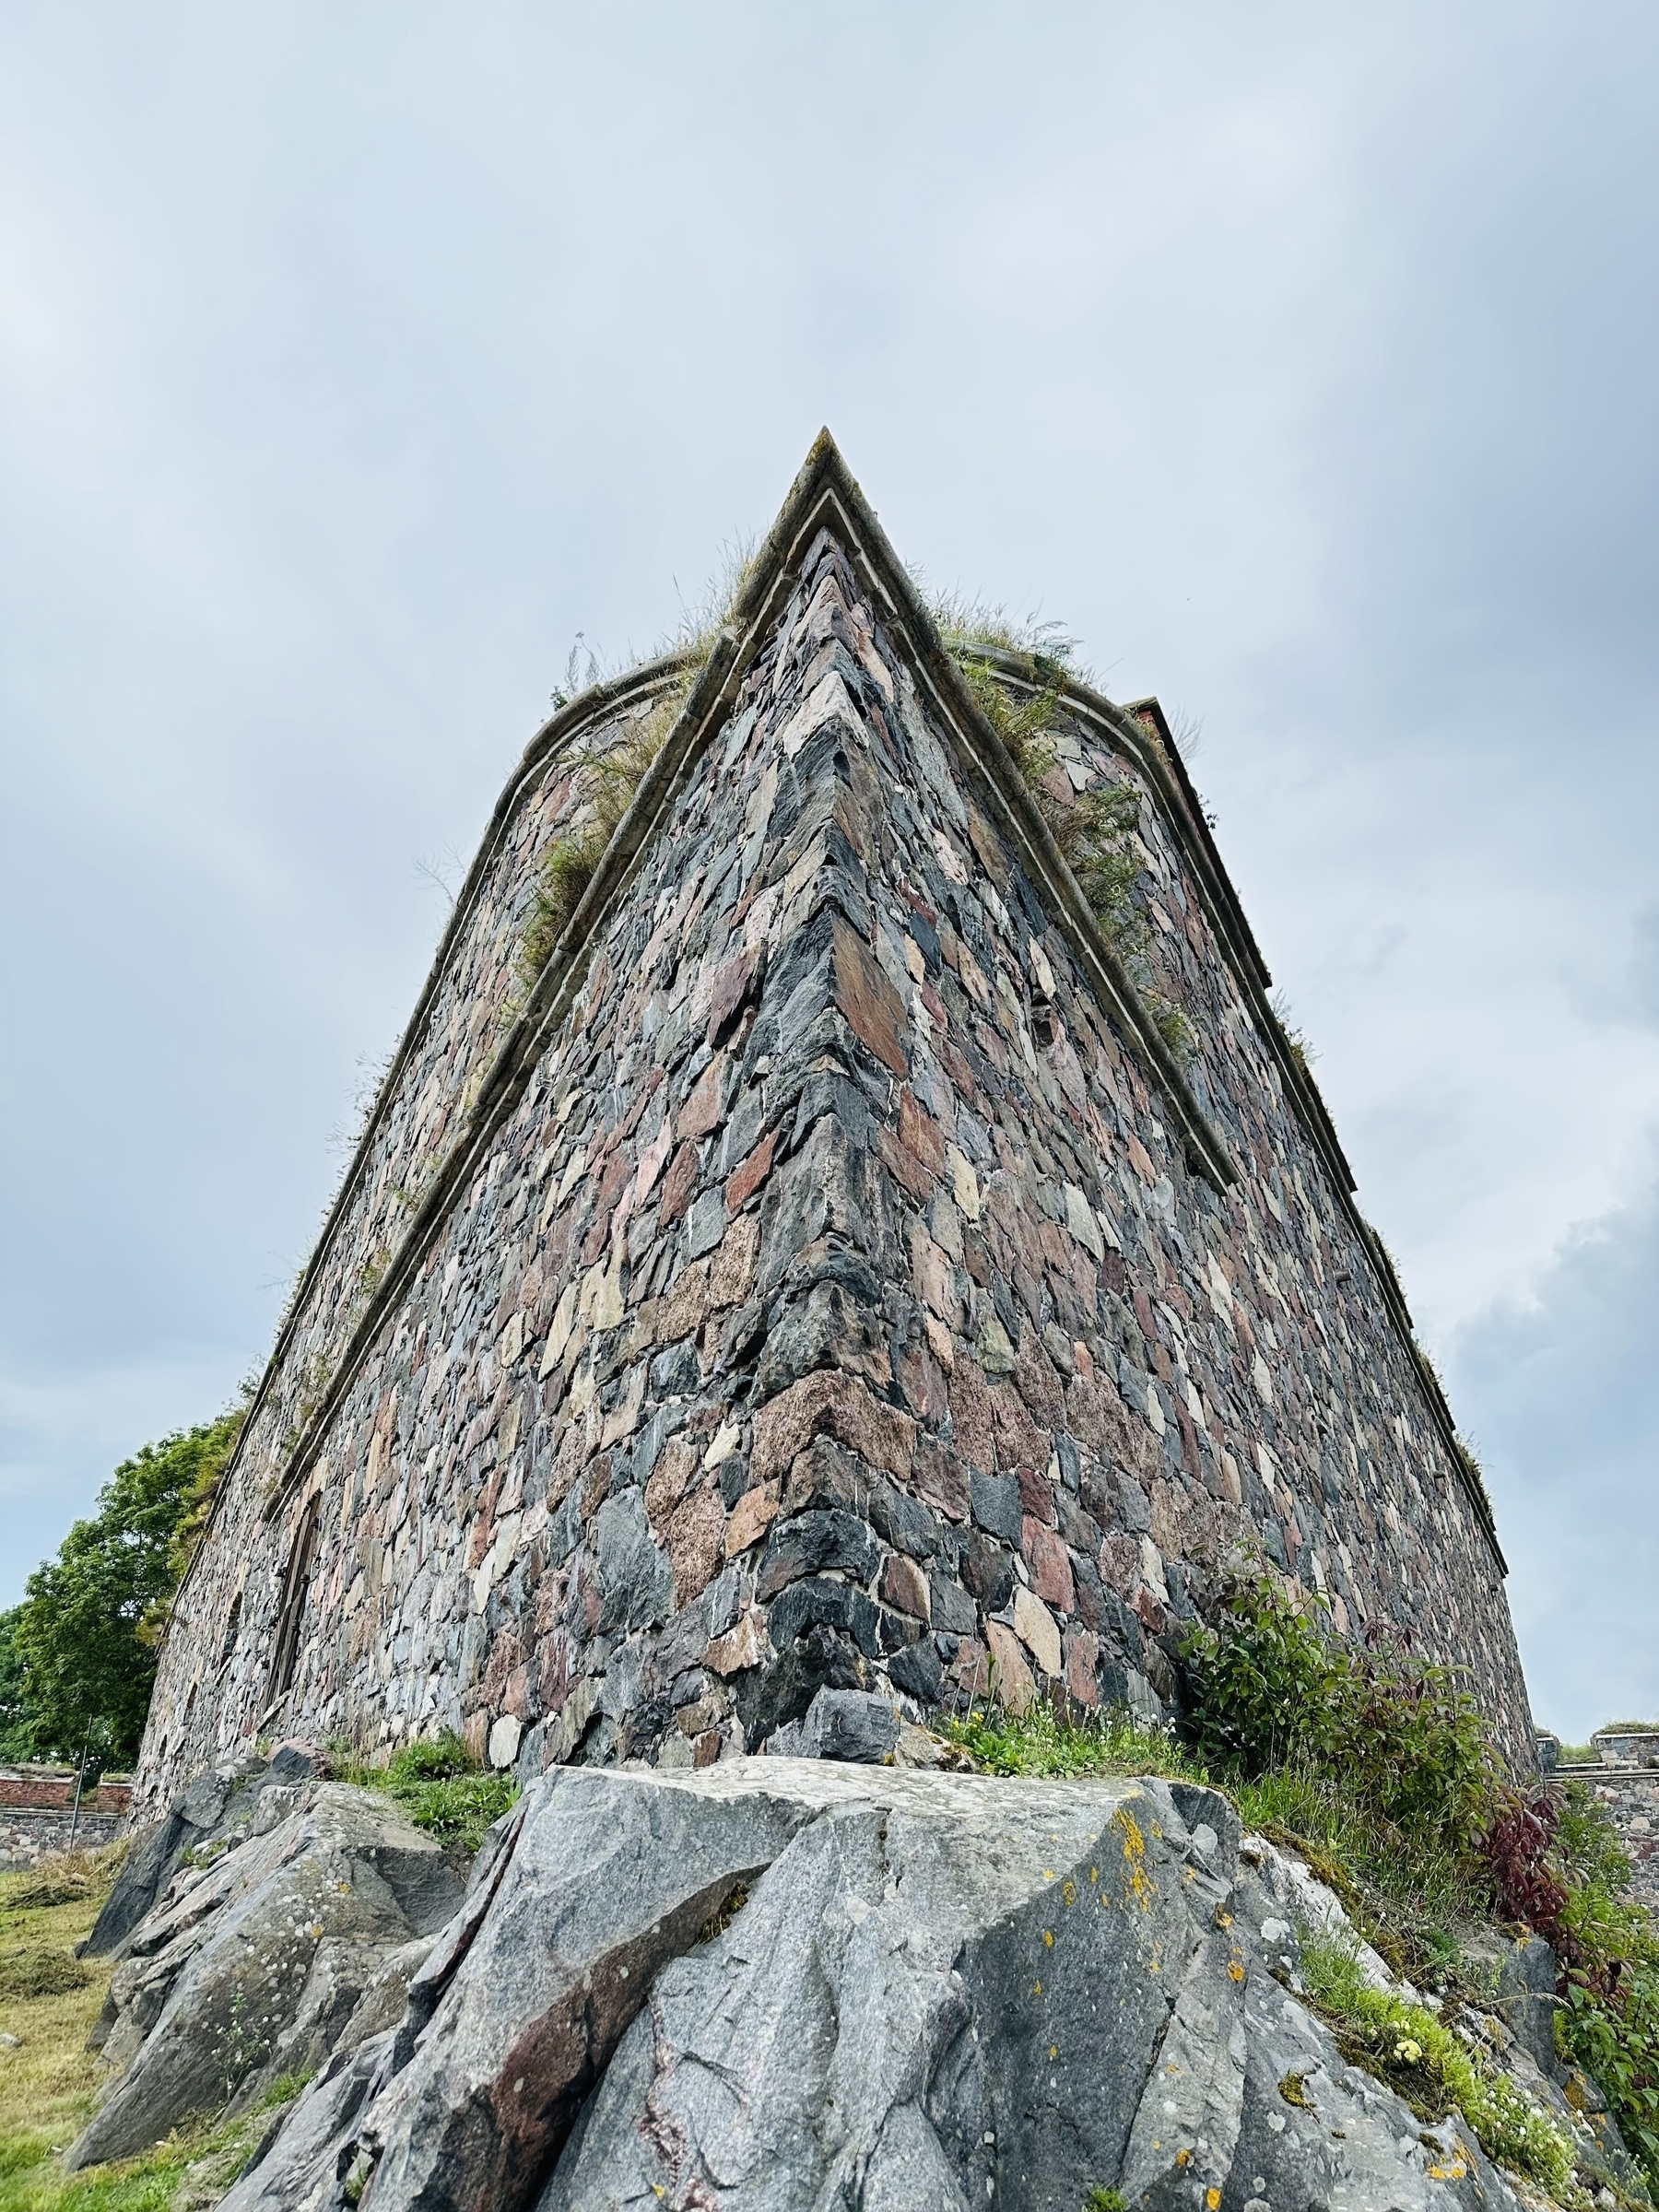 The sharp stone edge of a wall at Suomenlinna sea fortress.